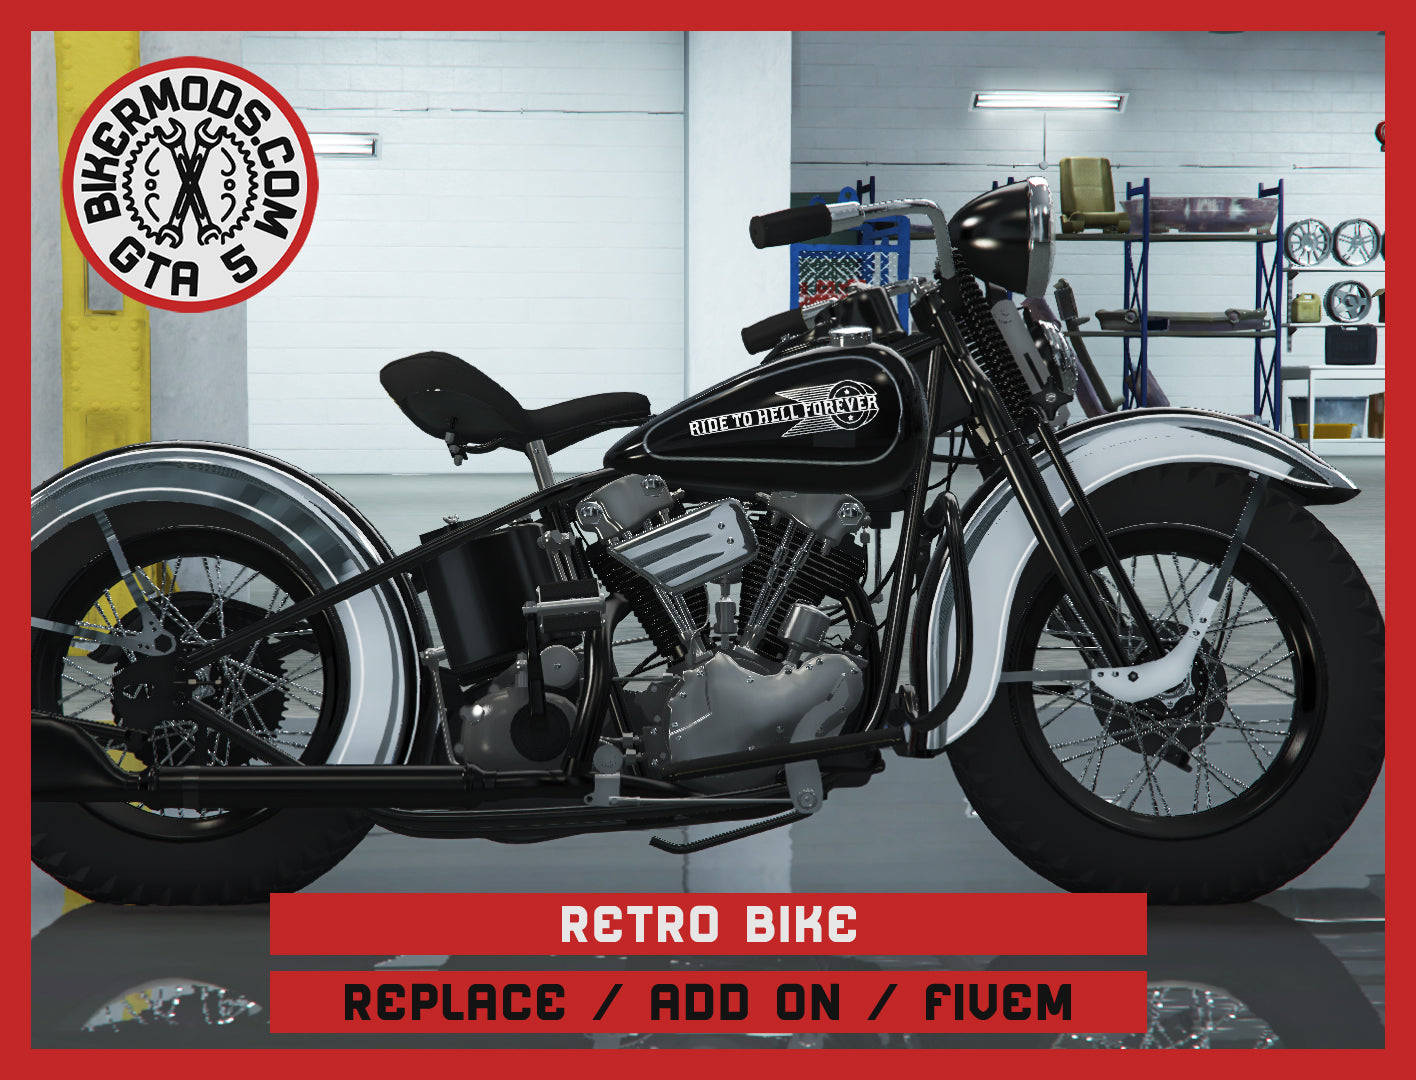 Retro Bike (Replace / Add On / FiveM) 286k Poly